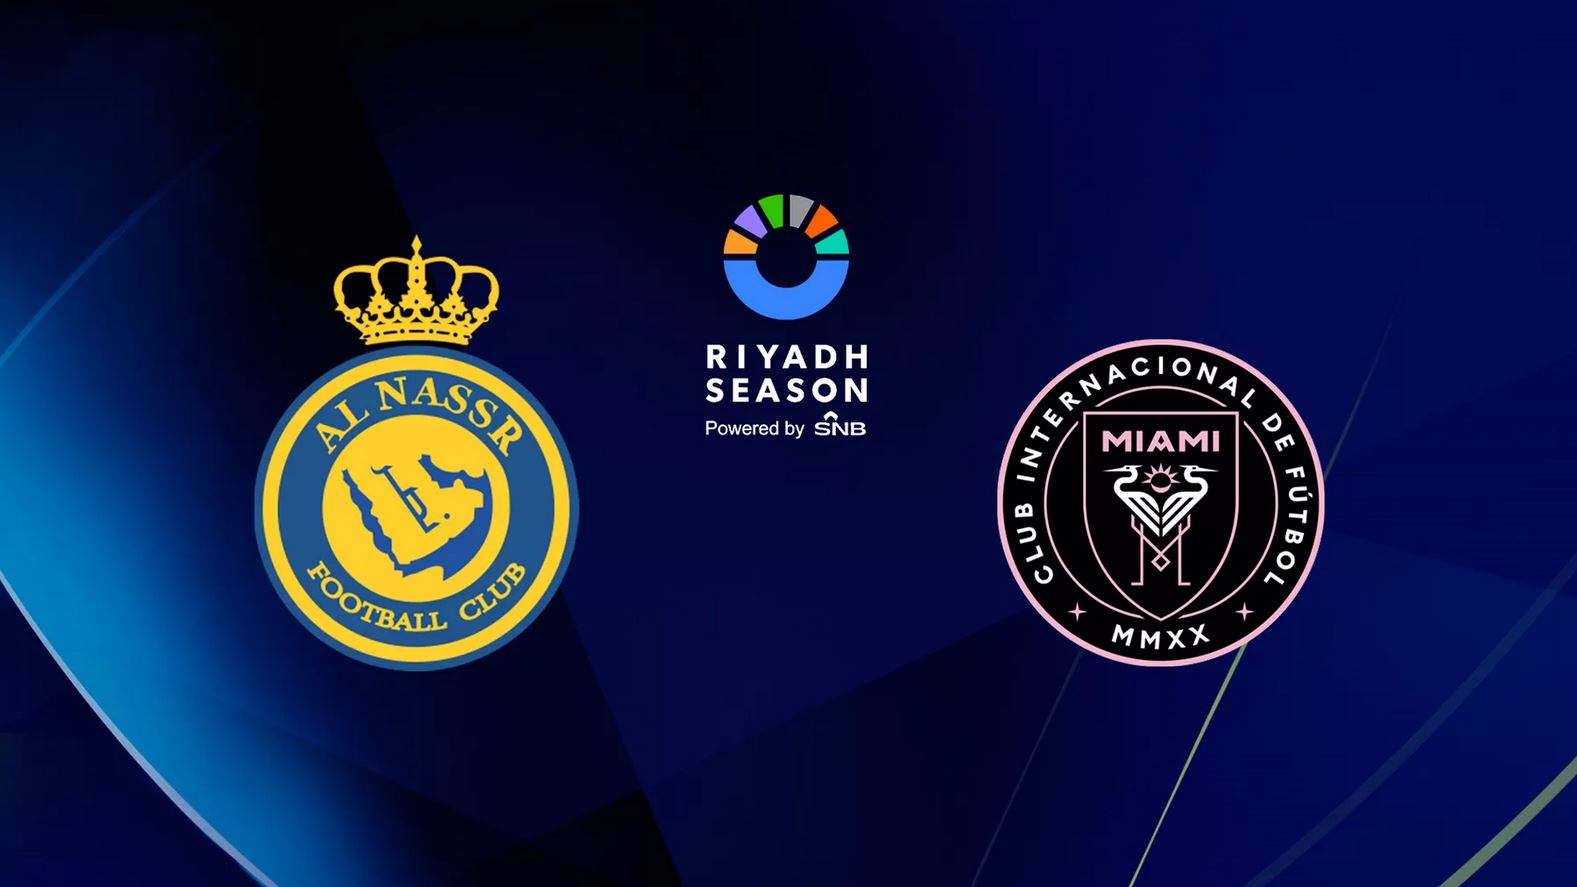 Al-Nassr / Inter Miami - Riyadh Season Cup (TV/Streaming) Sur quelles chaînes et à quelle heure regarder le match amical ?